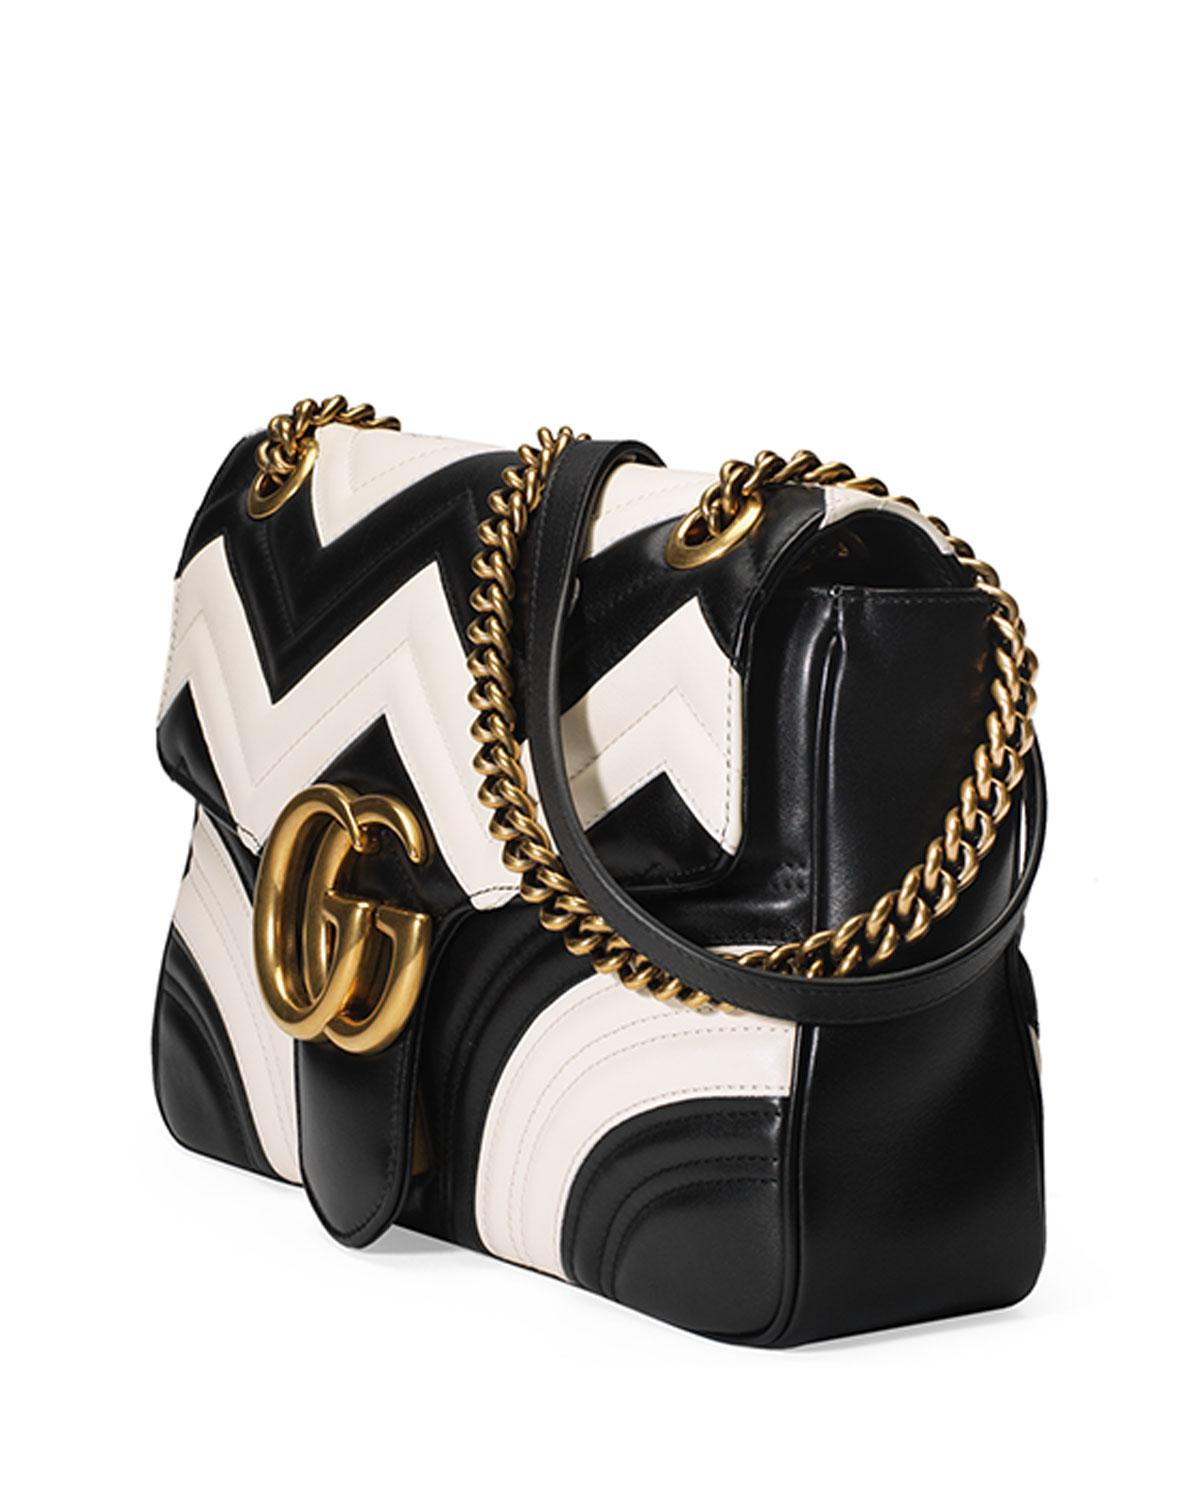 Gucci GG Marmont Chevron Leather Shoulder Bag in Black/White (Black) - Lyst